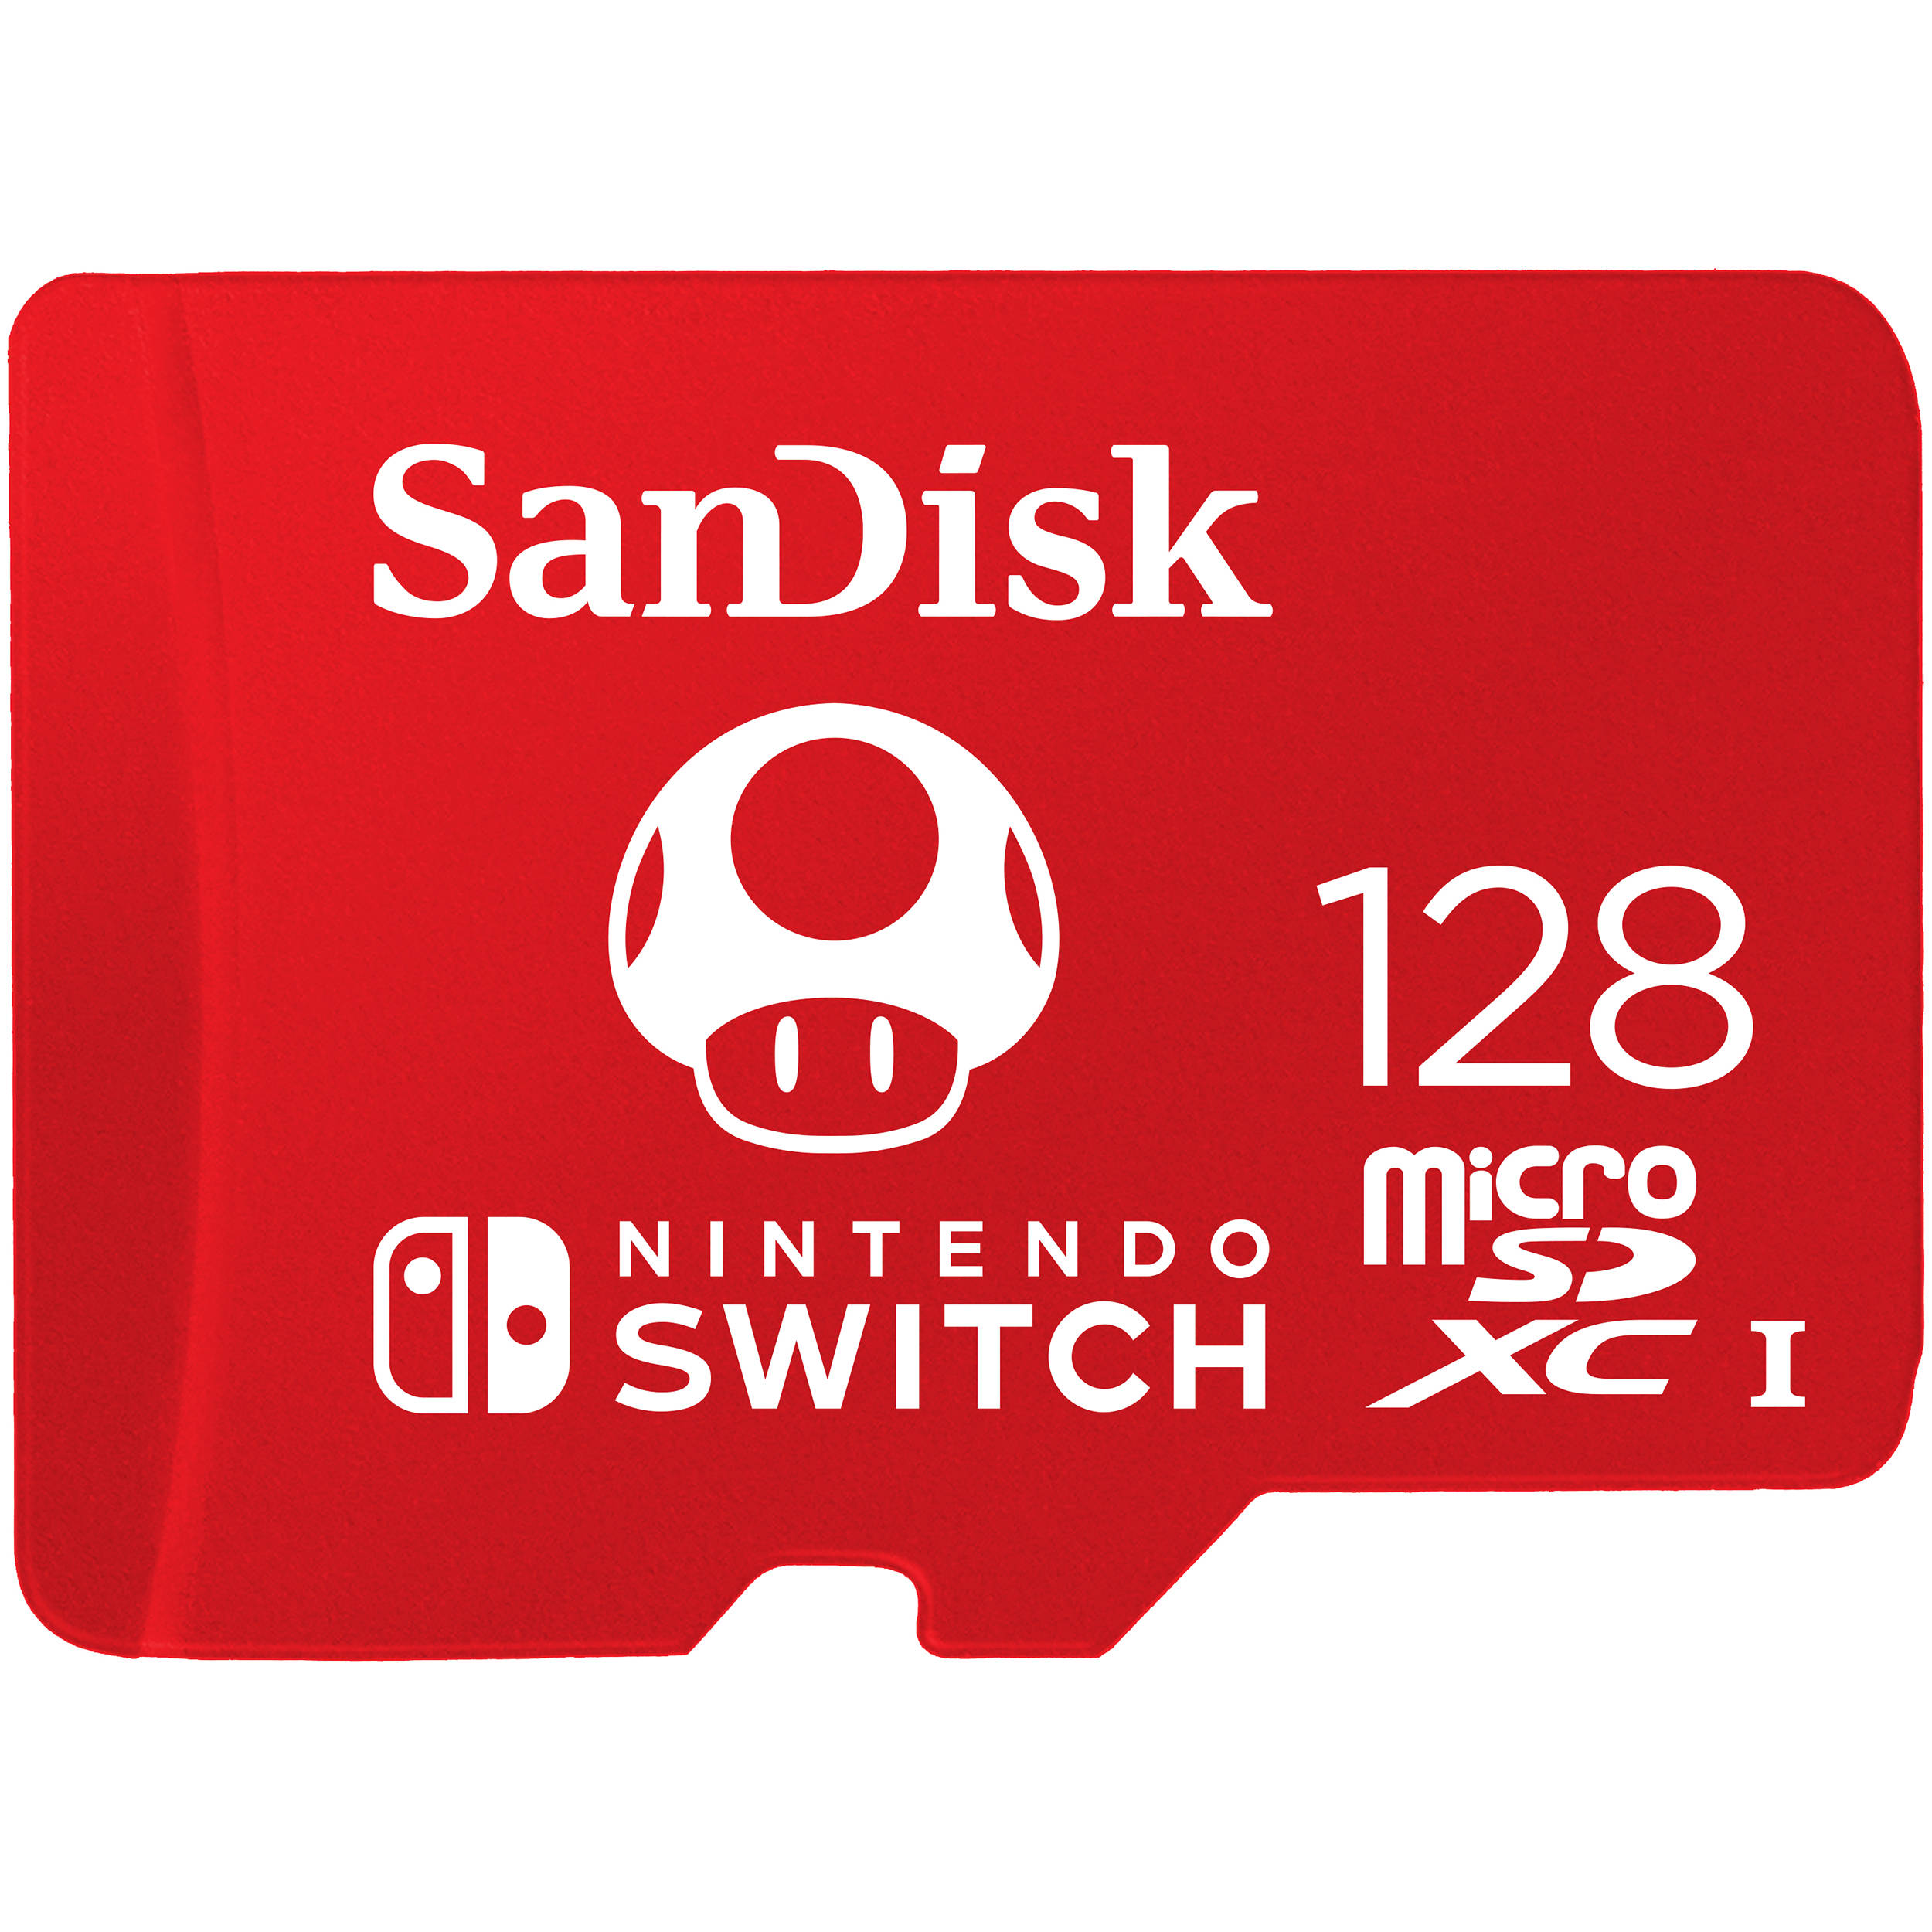 Nintendo Switch Sd Card